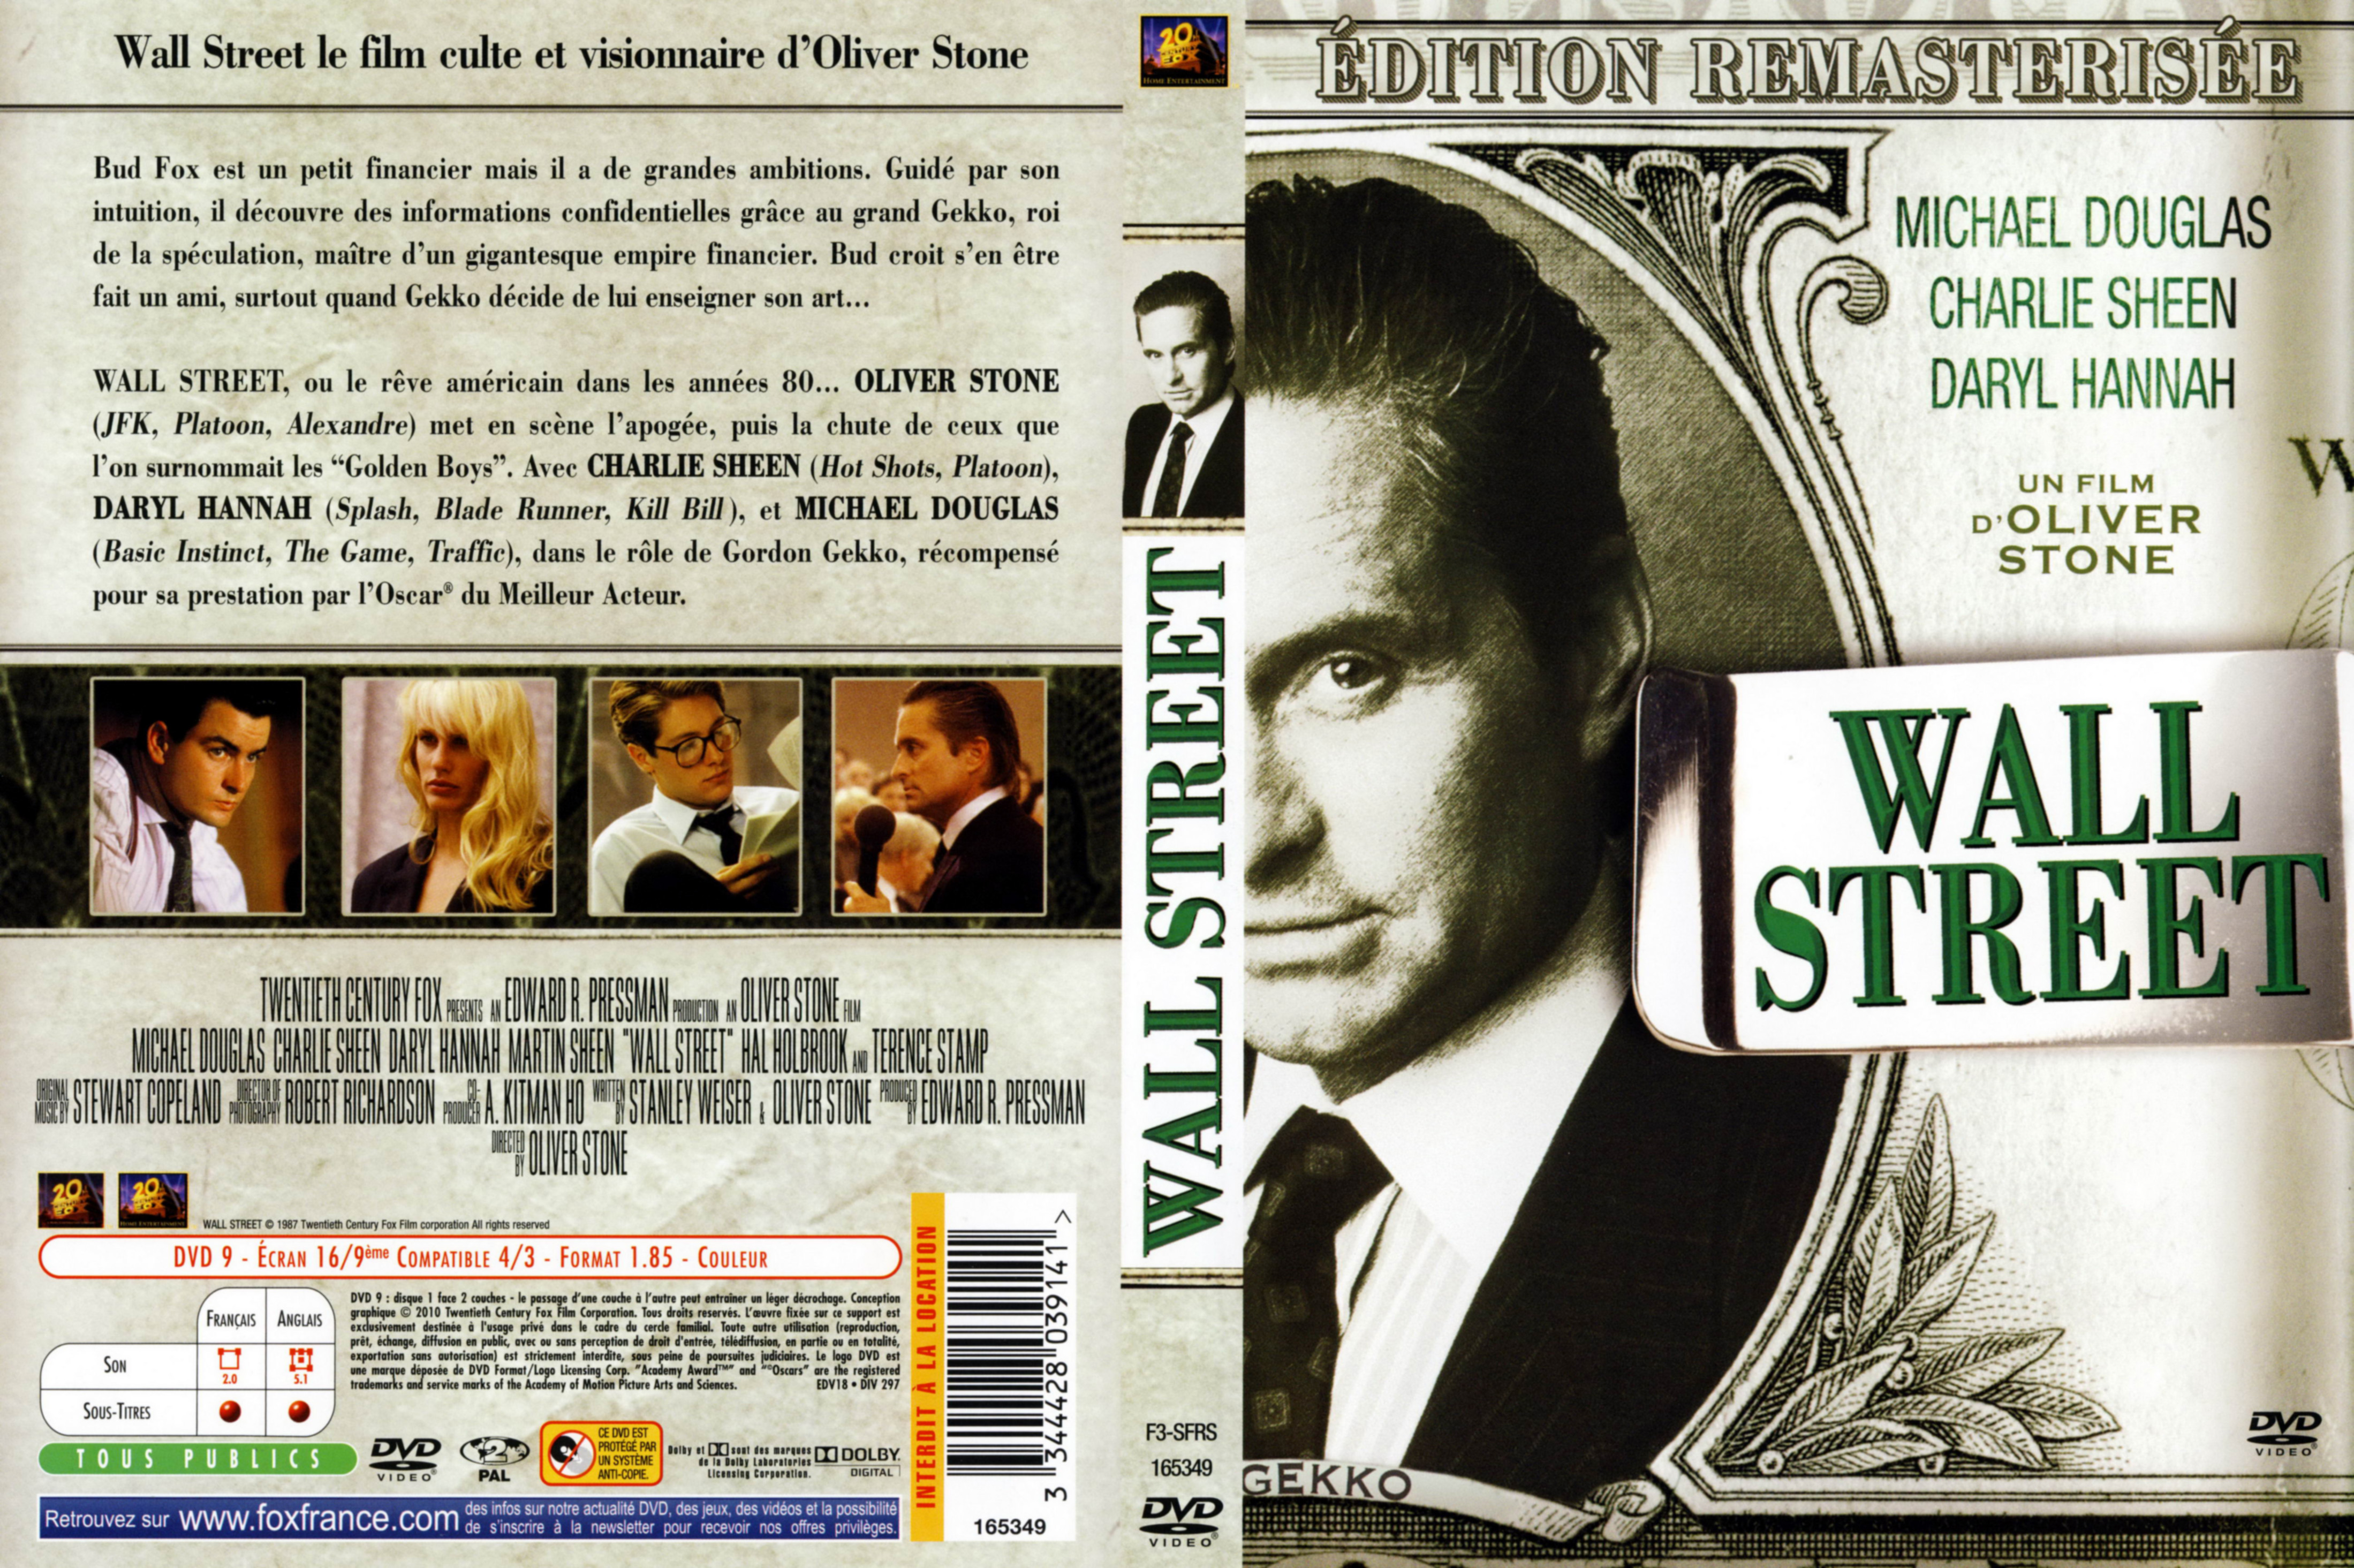 Jaquette DVD Wall Street v2